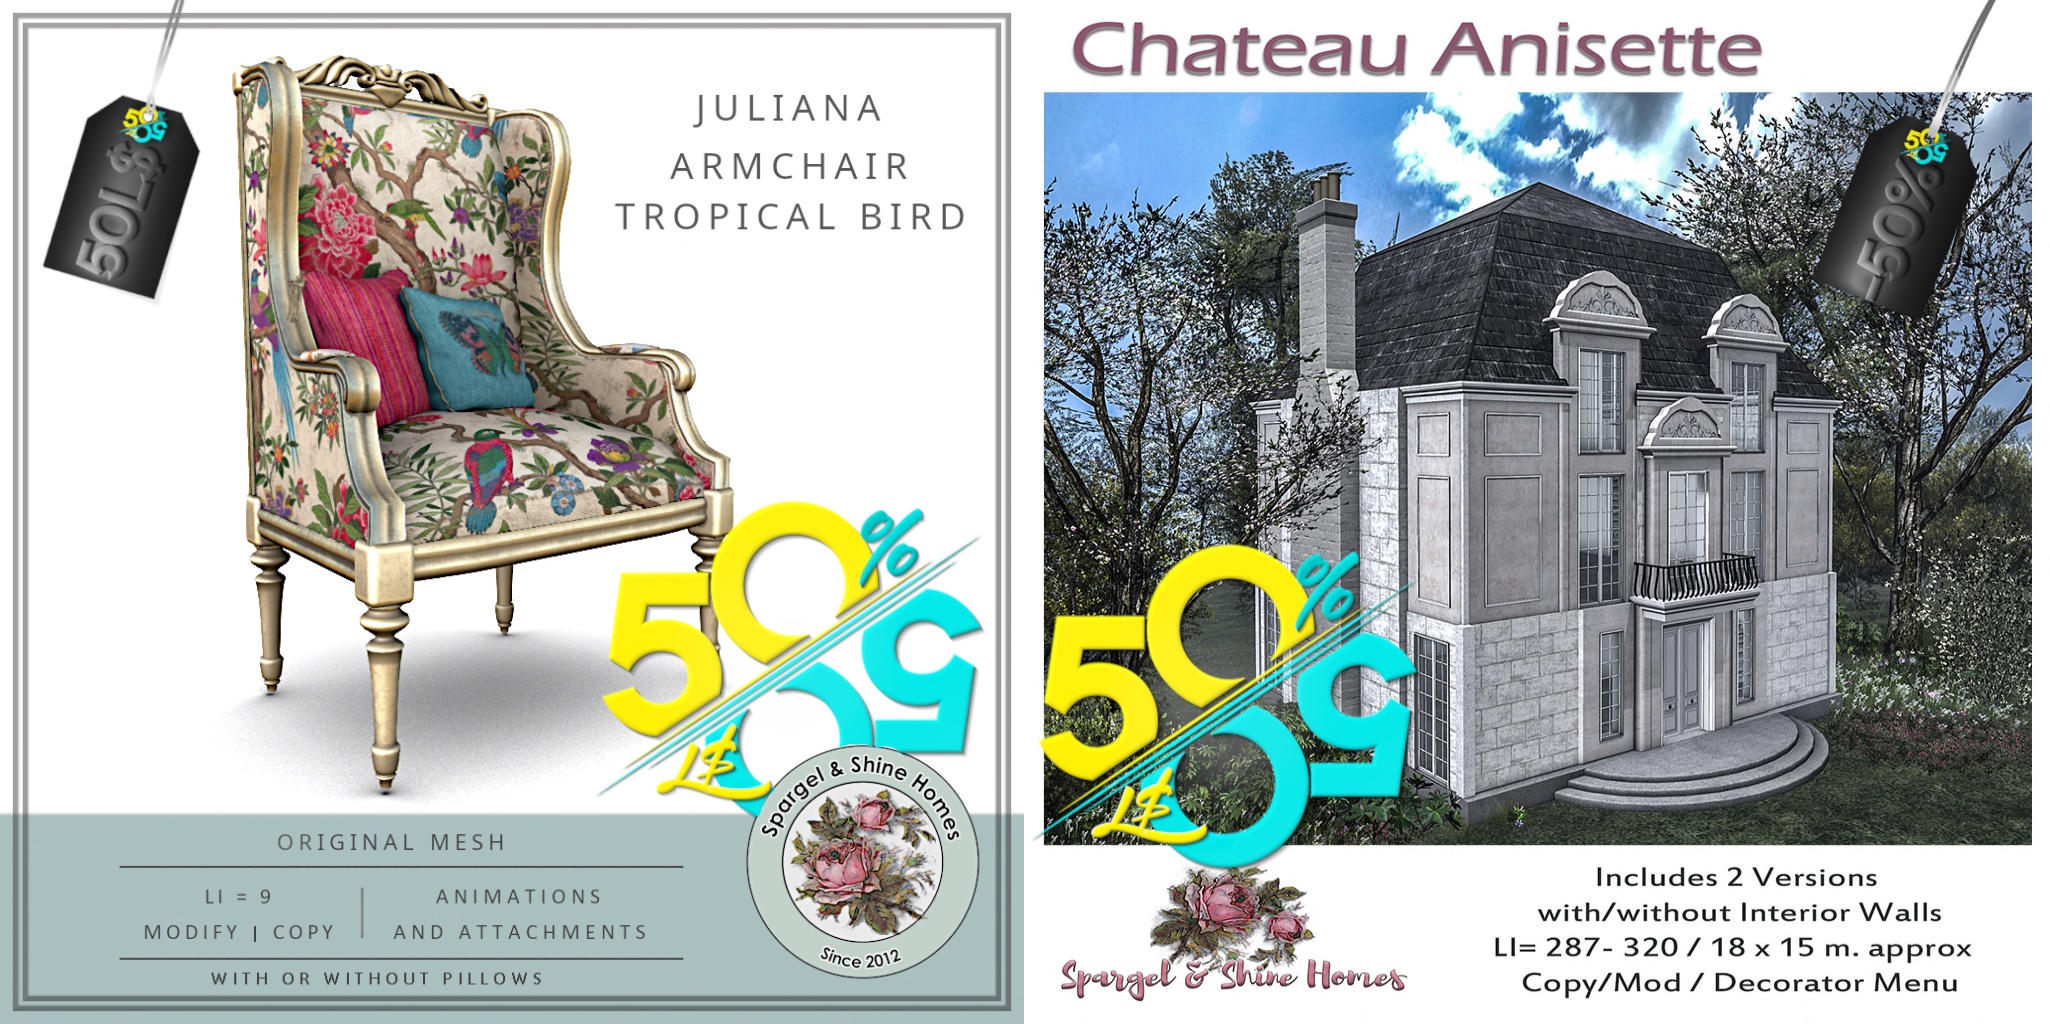 Spargel & Shine – Juliana Armchair & Chateau Anisette